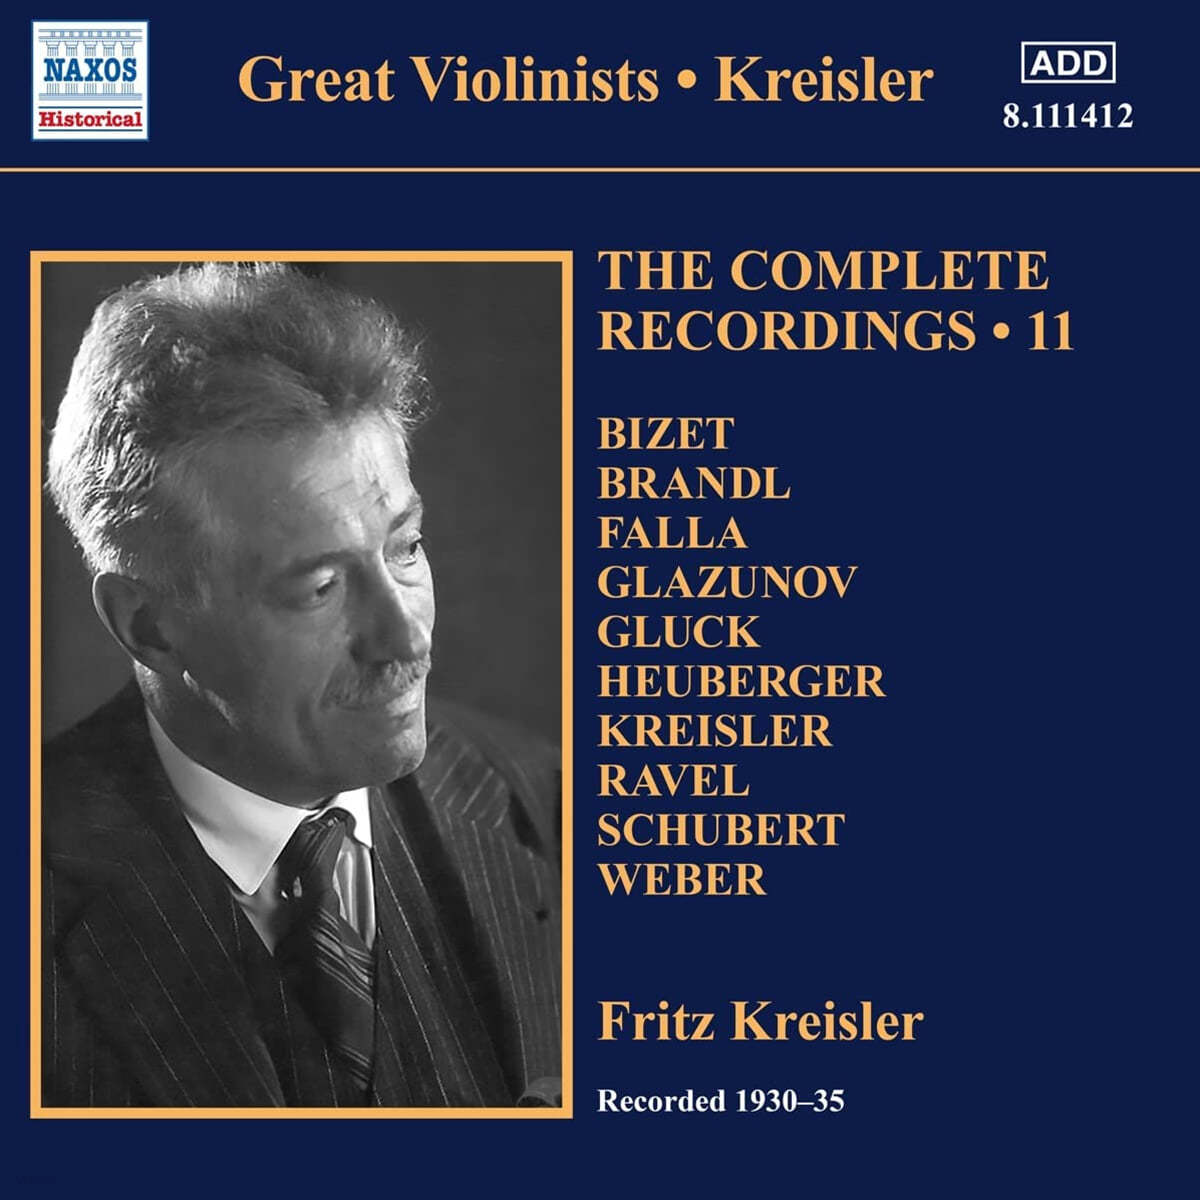 Fritz Kreisler 프리츠 크라이슬러 레코딩 전곡 11집 - 비제 / 브란들 / 팔라 / 글라주노프 / 글룩 외 (Great Violinists - The Complete Recordings Vol.11 - Bizet / Brandl / Falla / Glazunov / Gluck) 